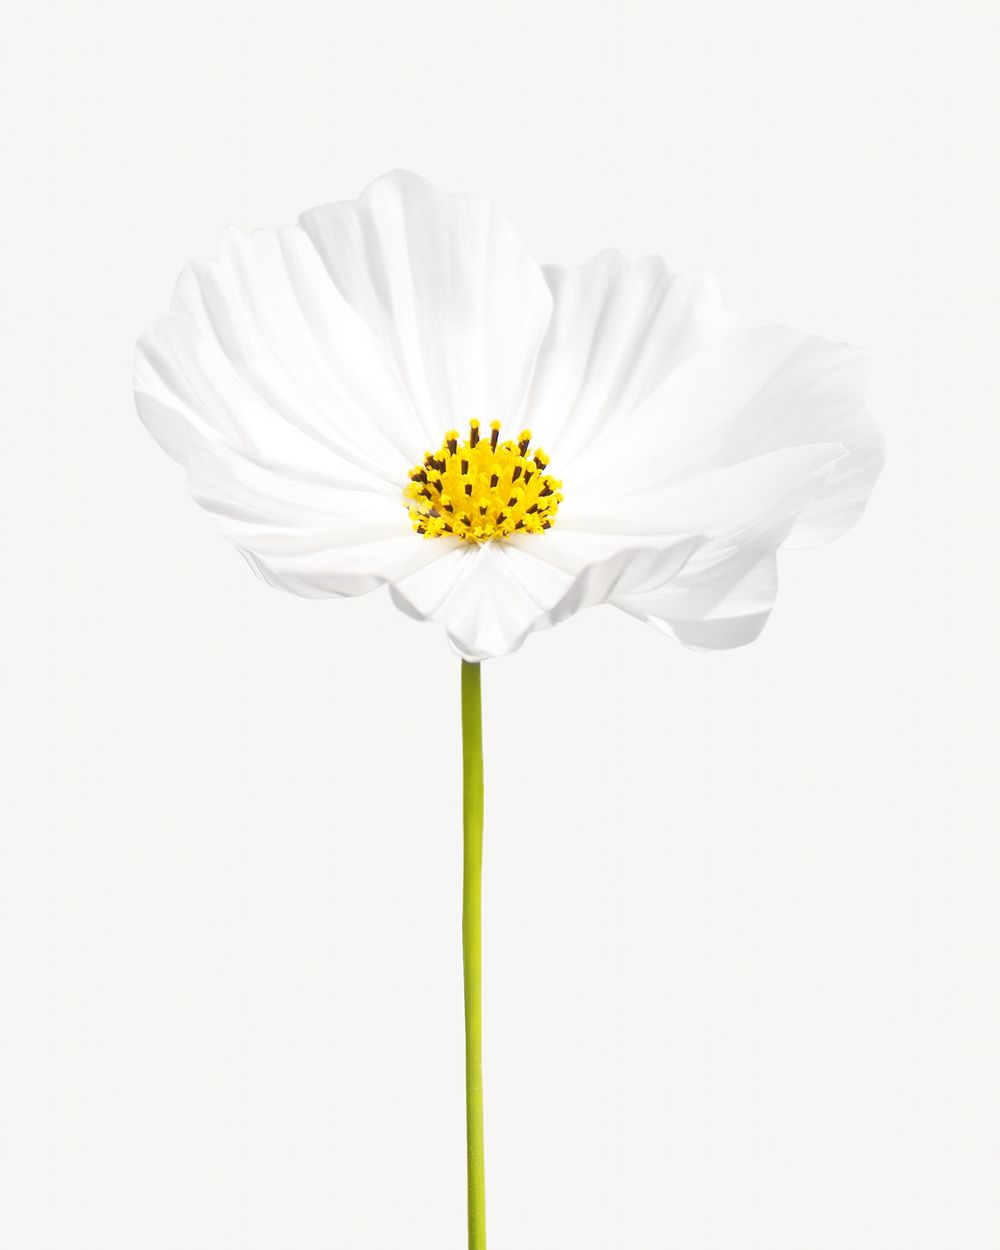 Spring white flower isolated image on white